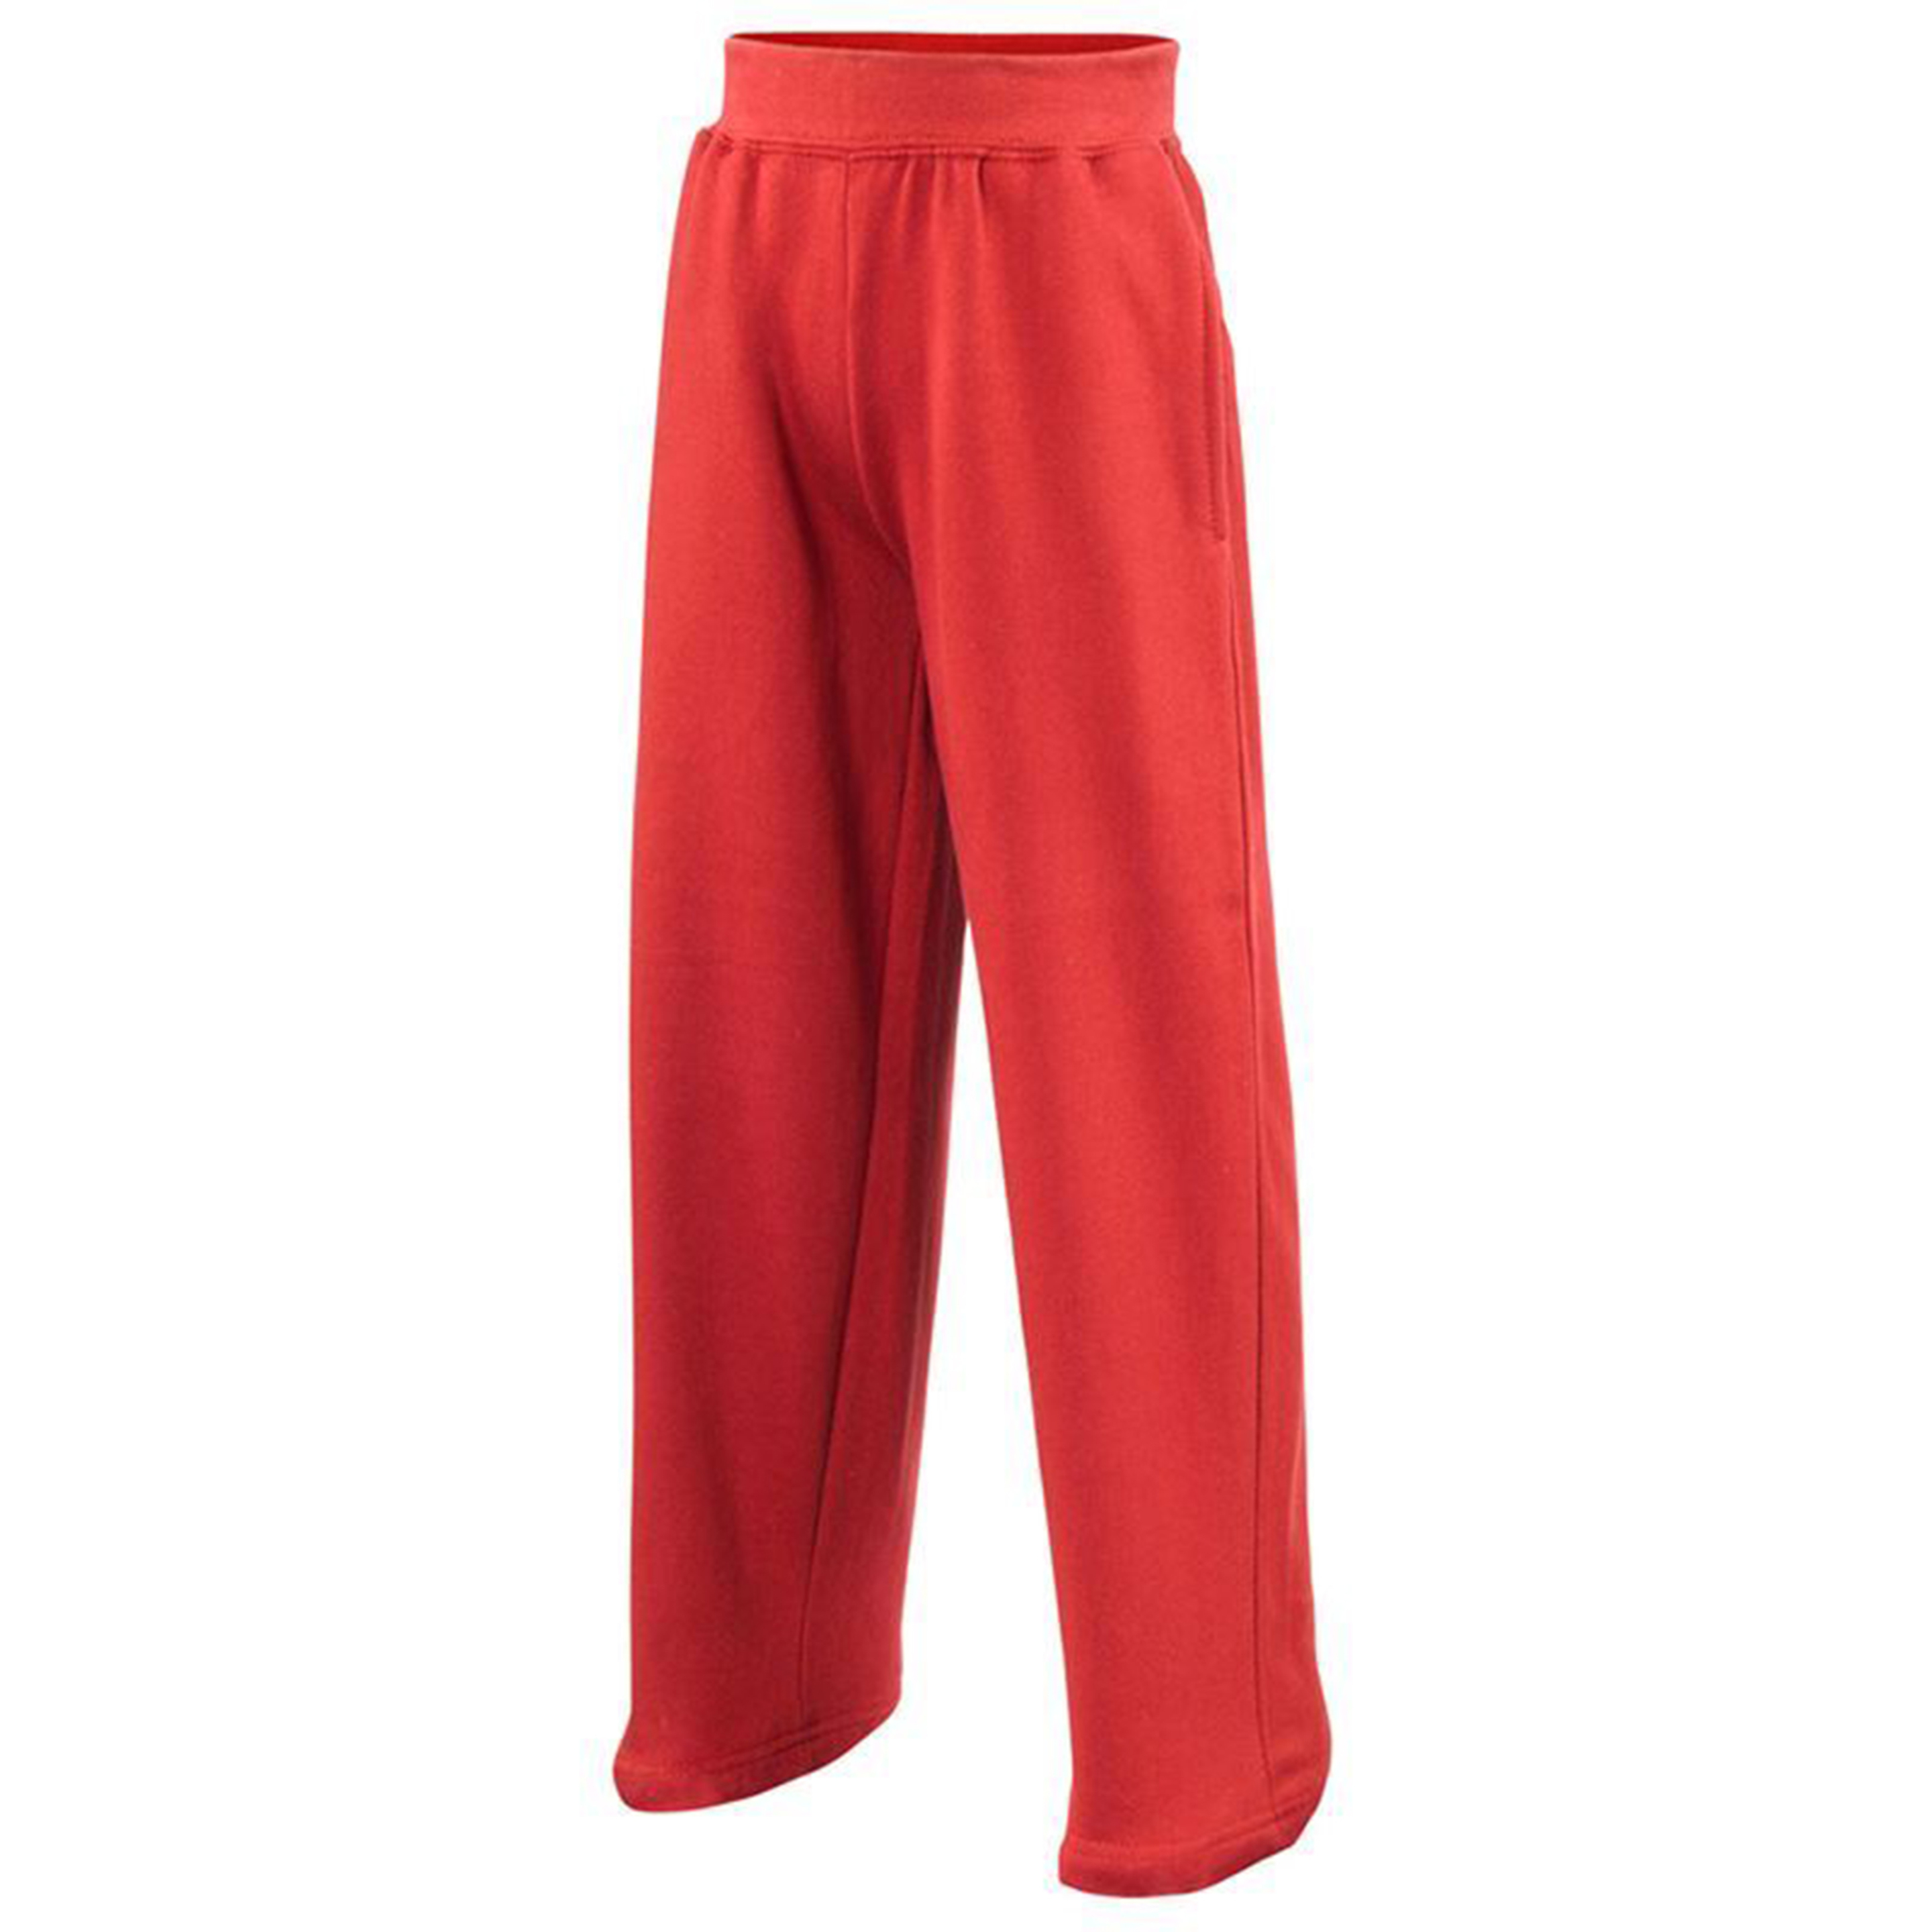 Pantalones De Deporte Unisex Para Niños (Paquete De 2) Awdis (Rojo)